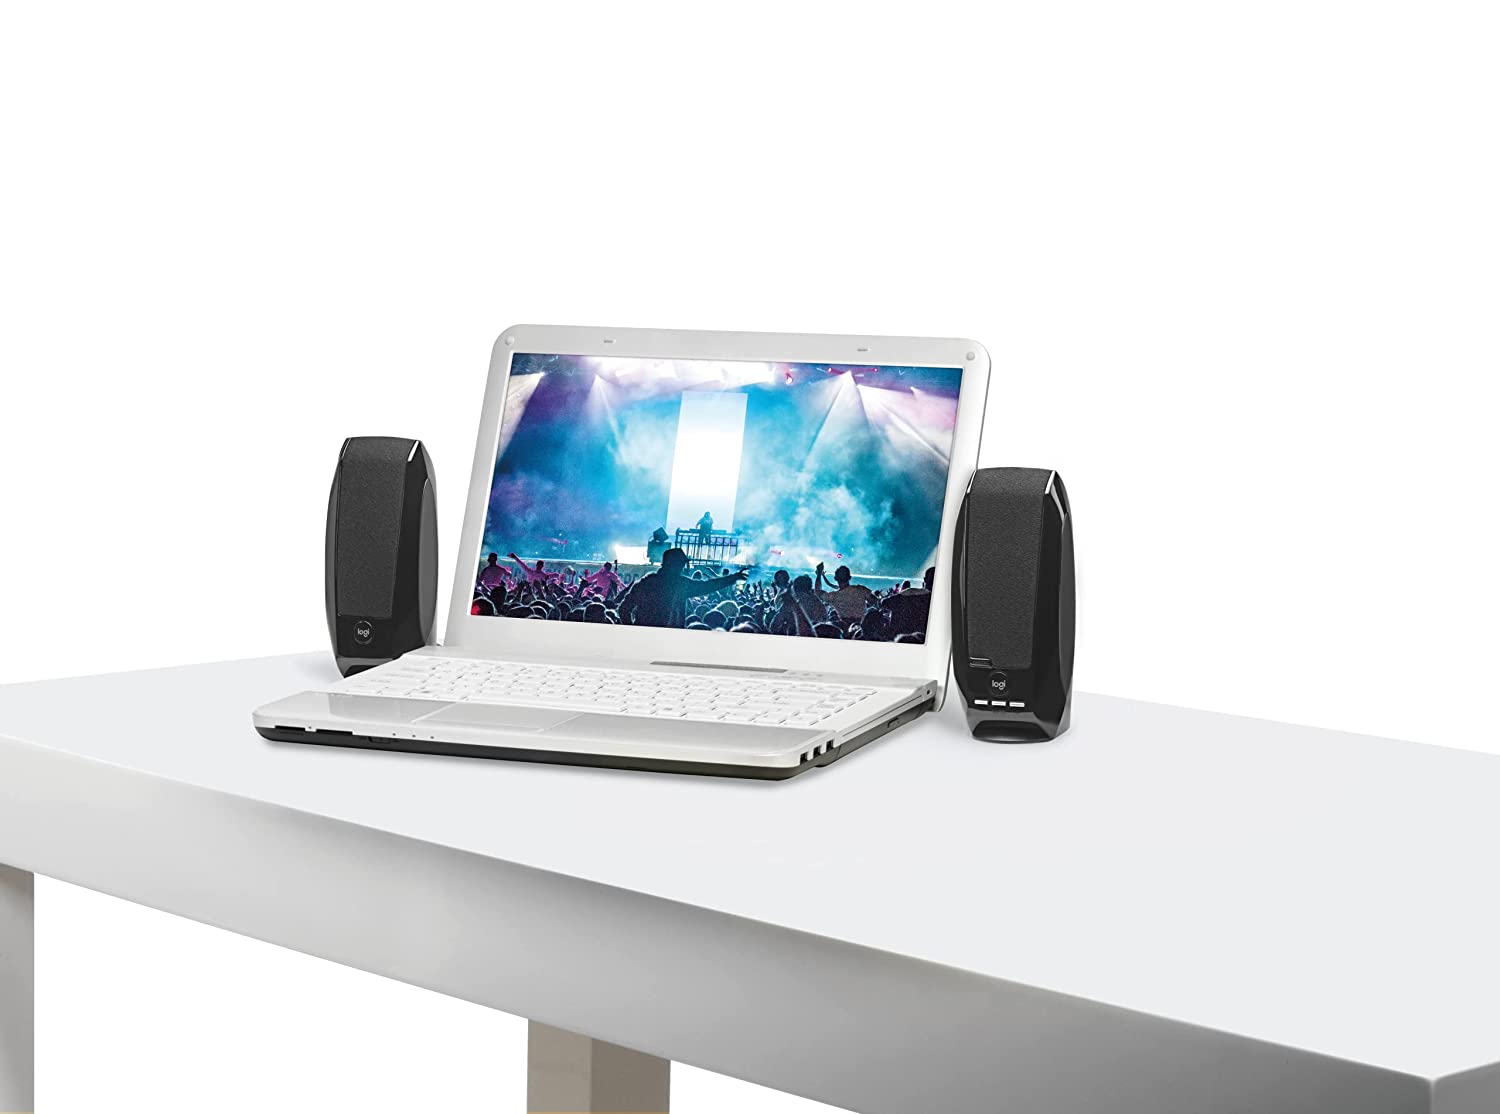 Logitech S150 Digital USB Speaker Crystal-clear stereo sound